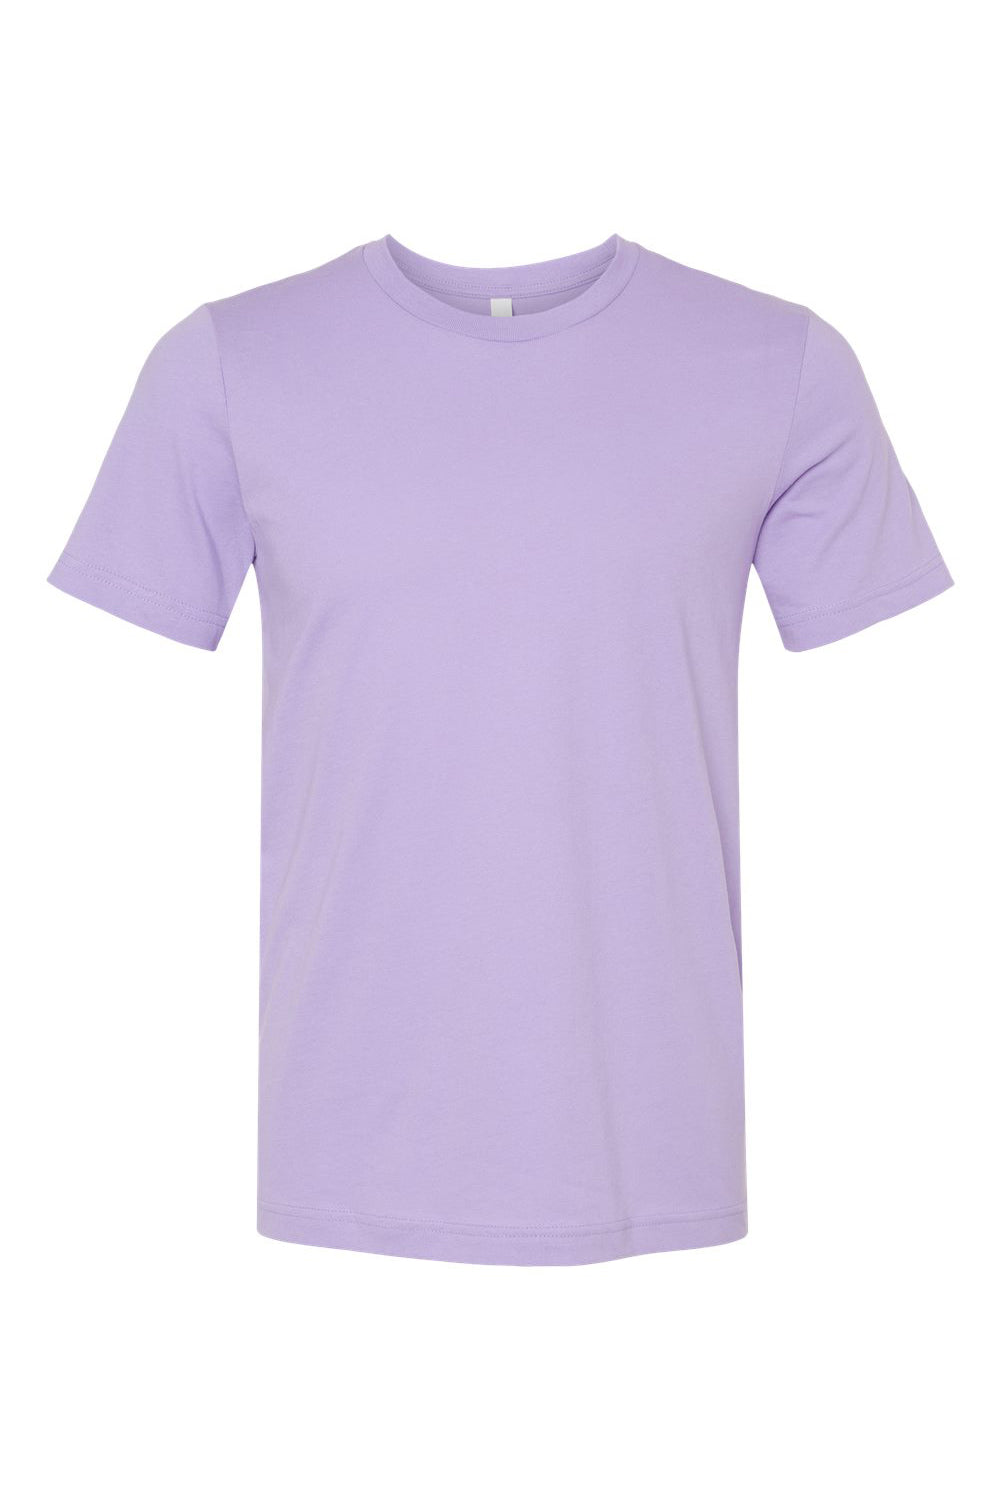 Bella + Canvas BC3001/3001C Mens Jersey Short Sleeve Crewneck T-Shirt Dark Lavender Purple Flat Front